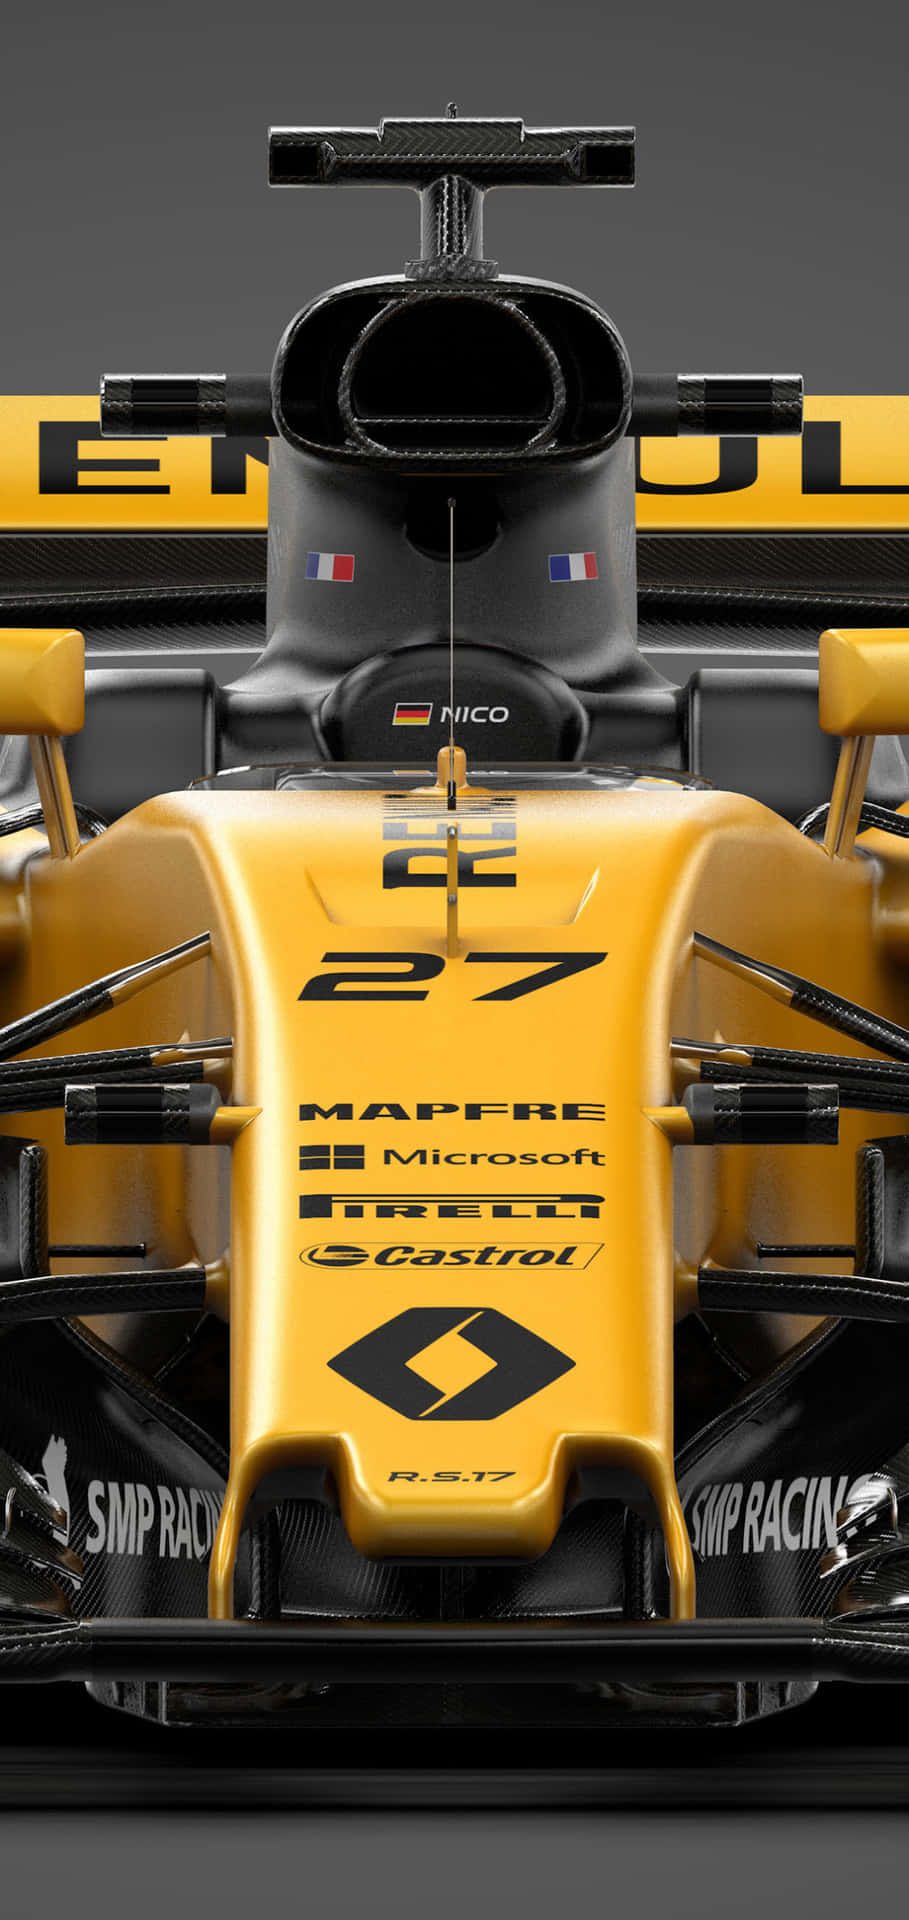 The Formula 1 Iphone Wallpaper